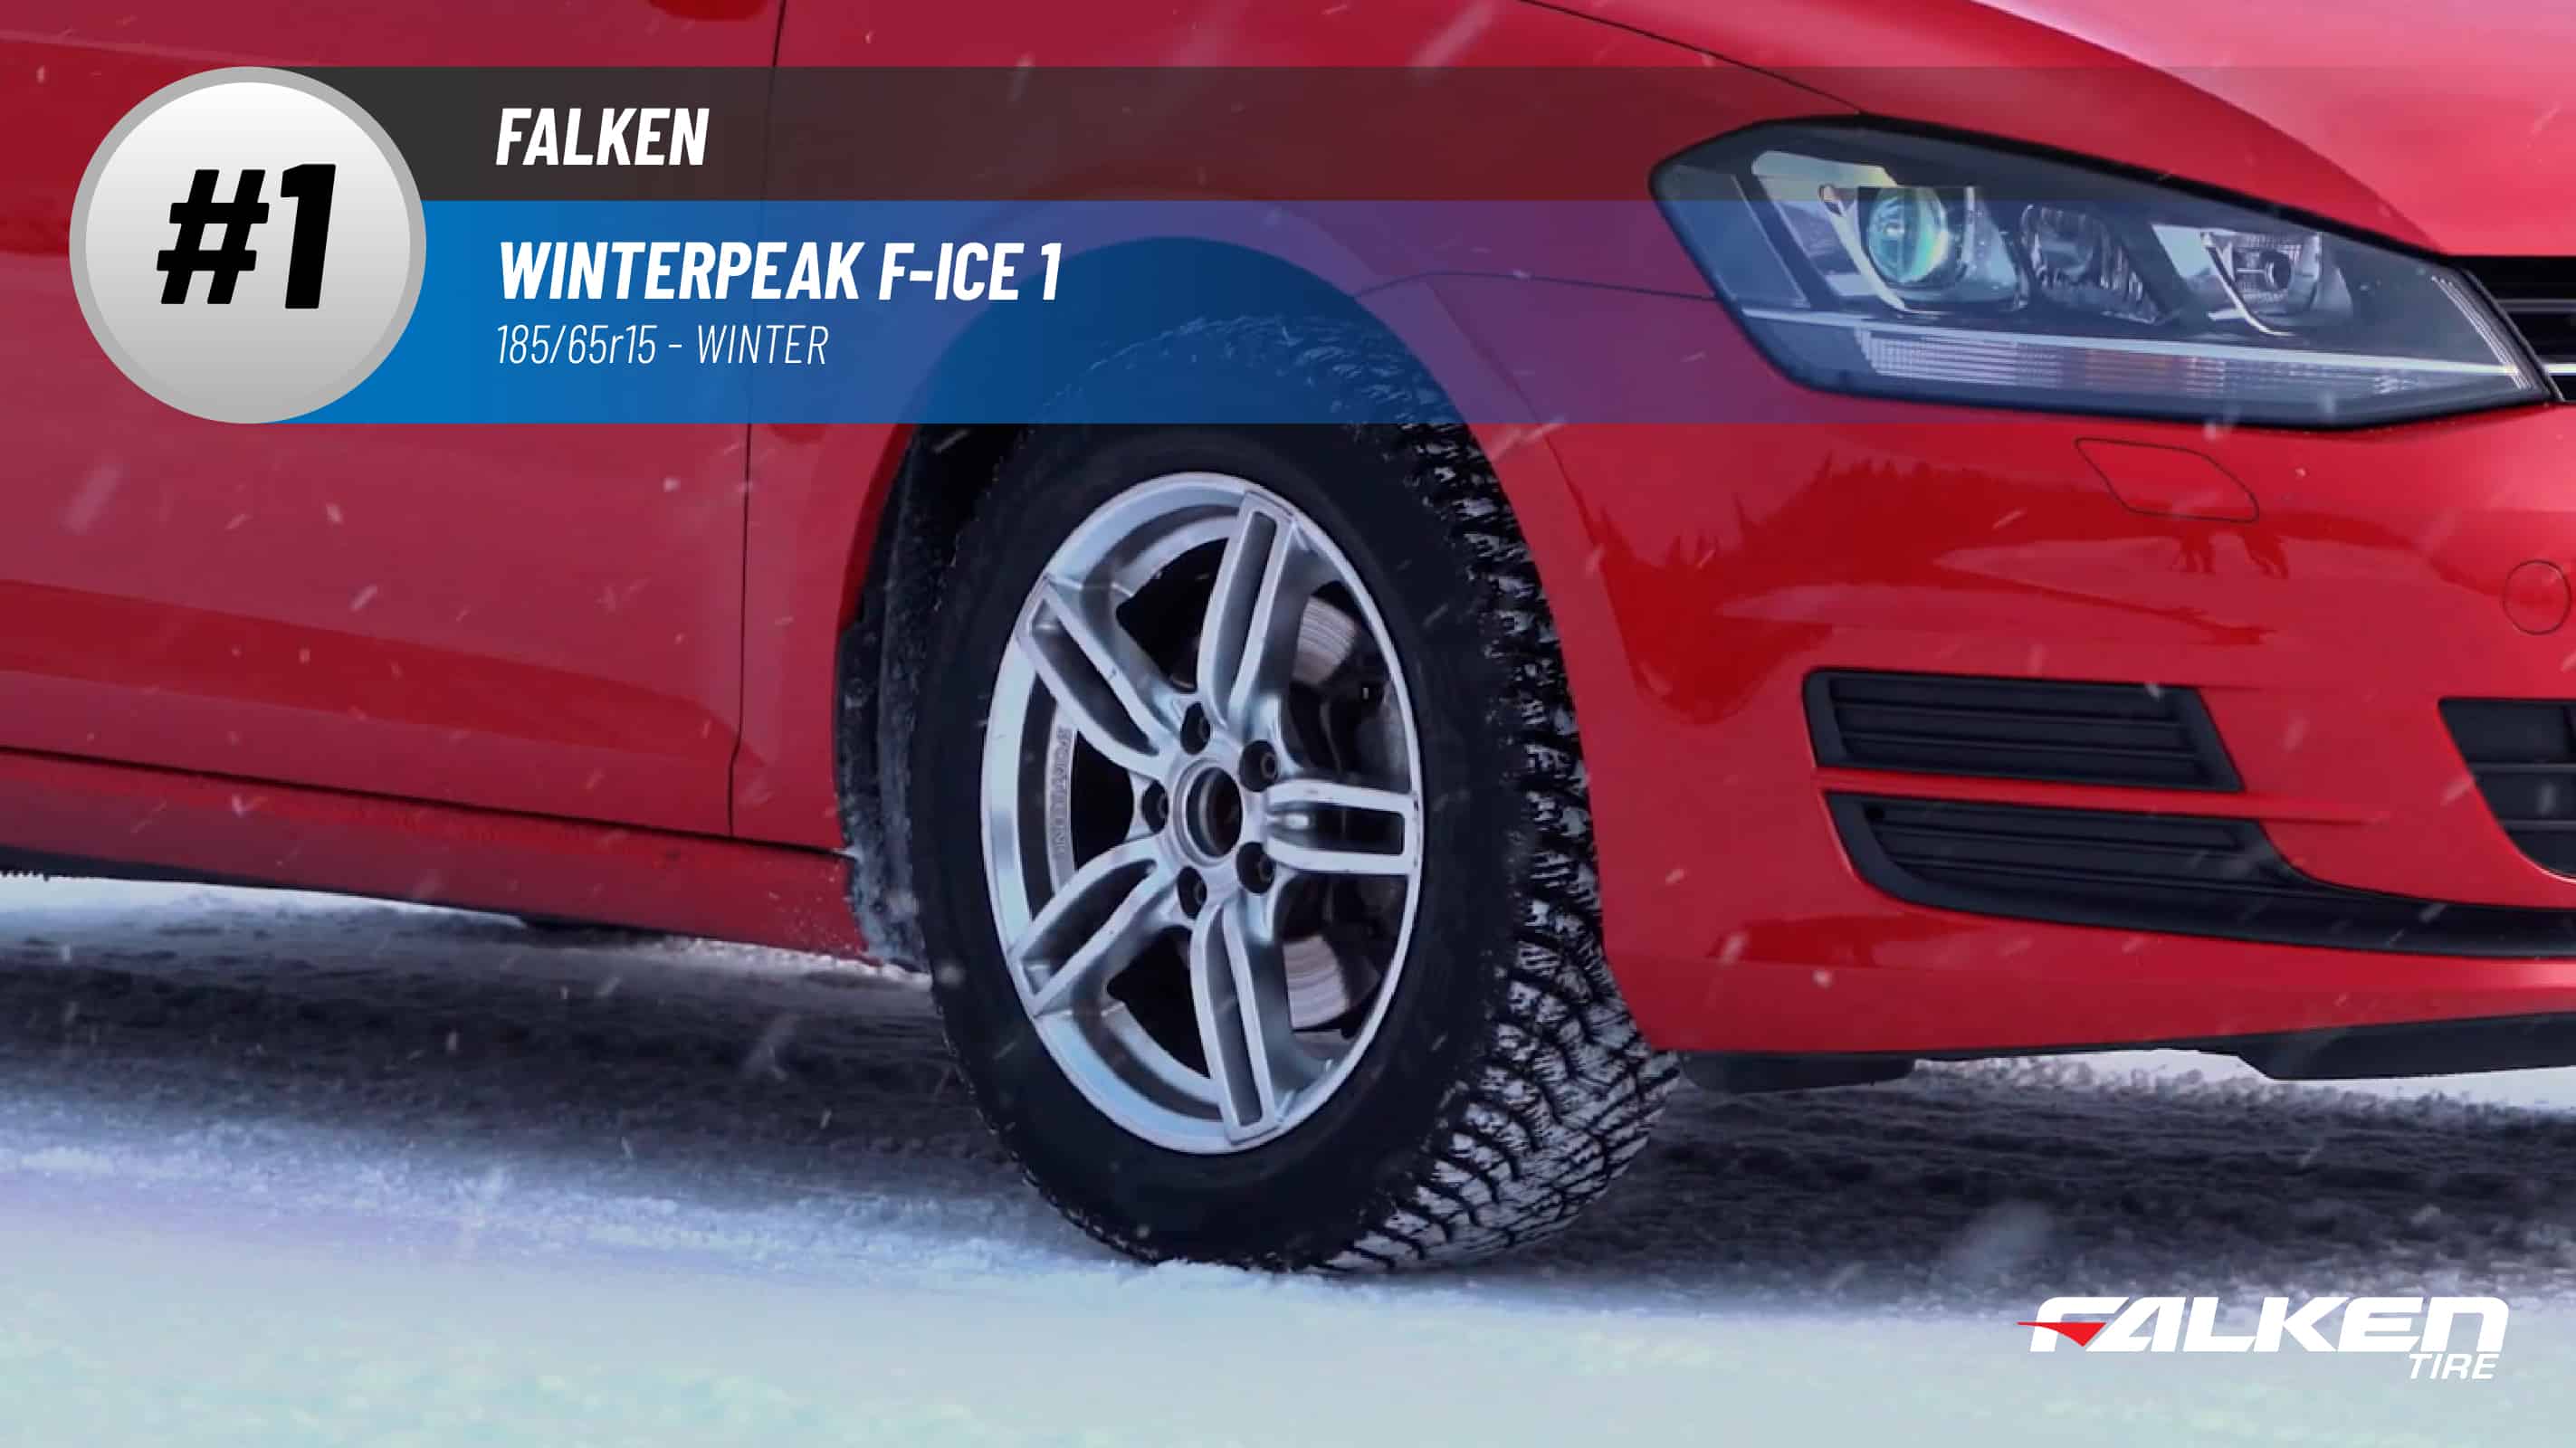 Top #1 Winter Tires: Falken Winterpeak F-Ice 1 – 185/65r15